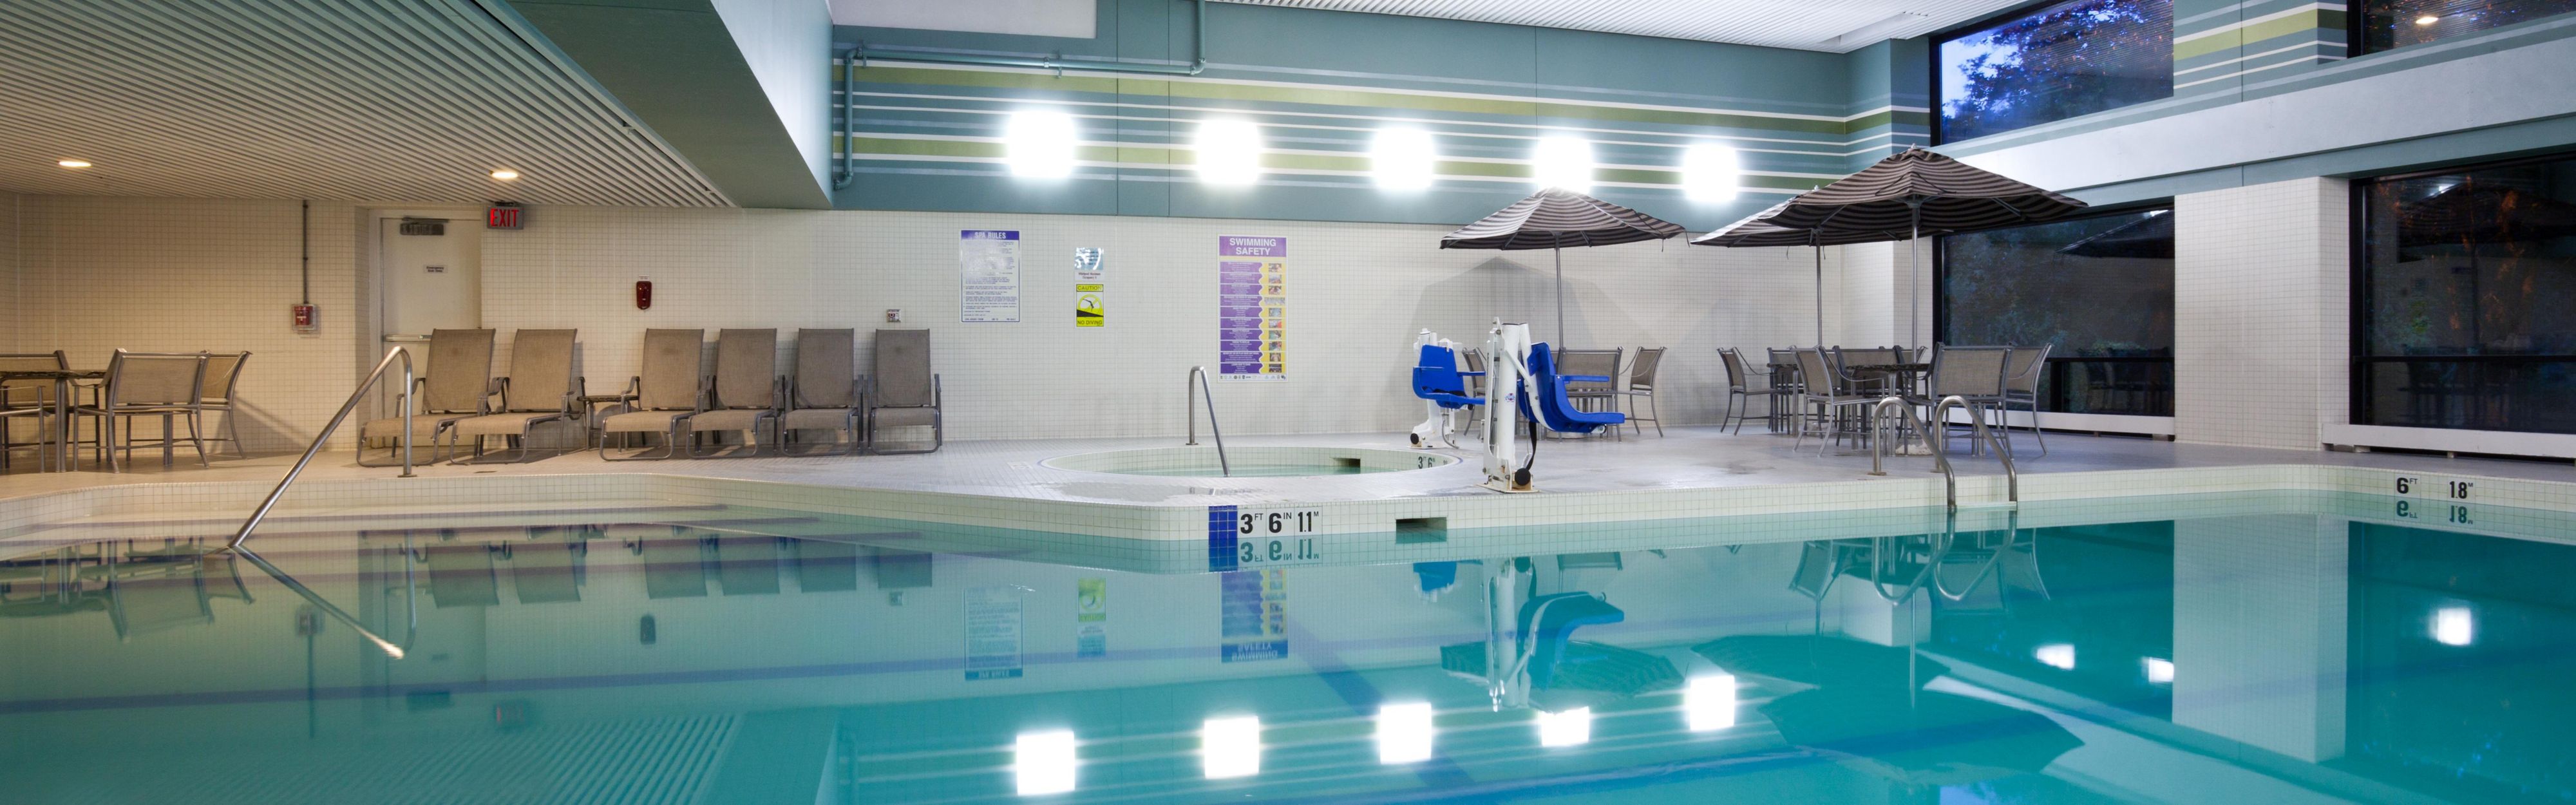 Indoor saline pool with ADA accessible lift